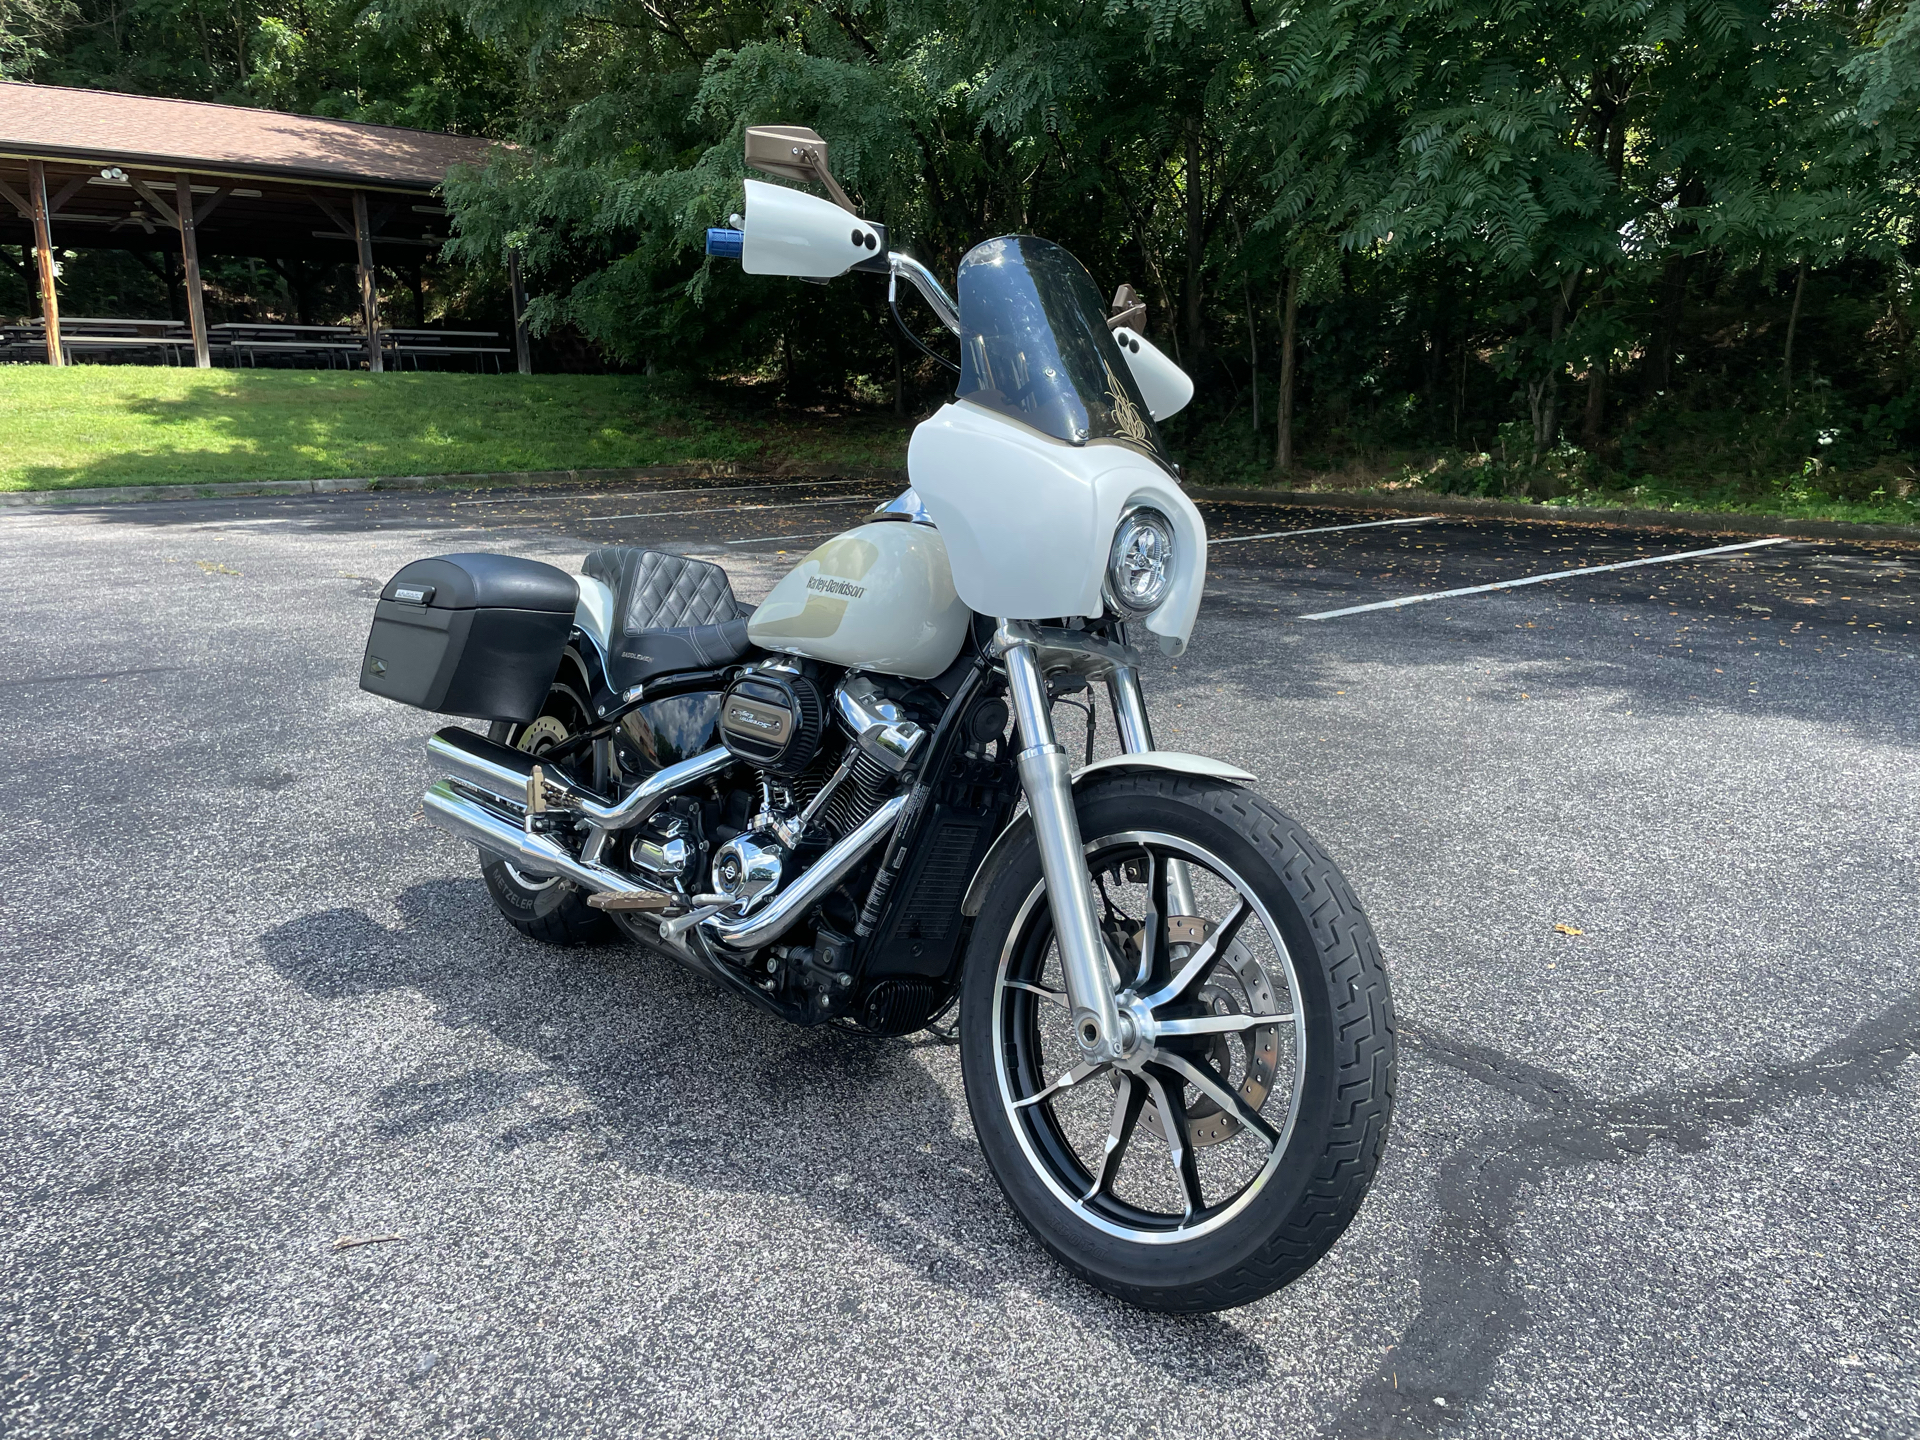 2018 Harley-Davidson Low Rider in Roanoke, Virginia - Photo 6